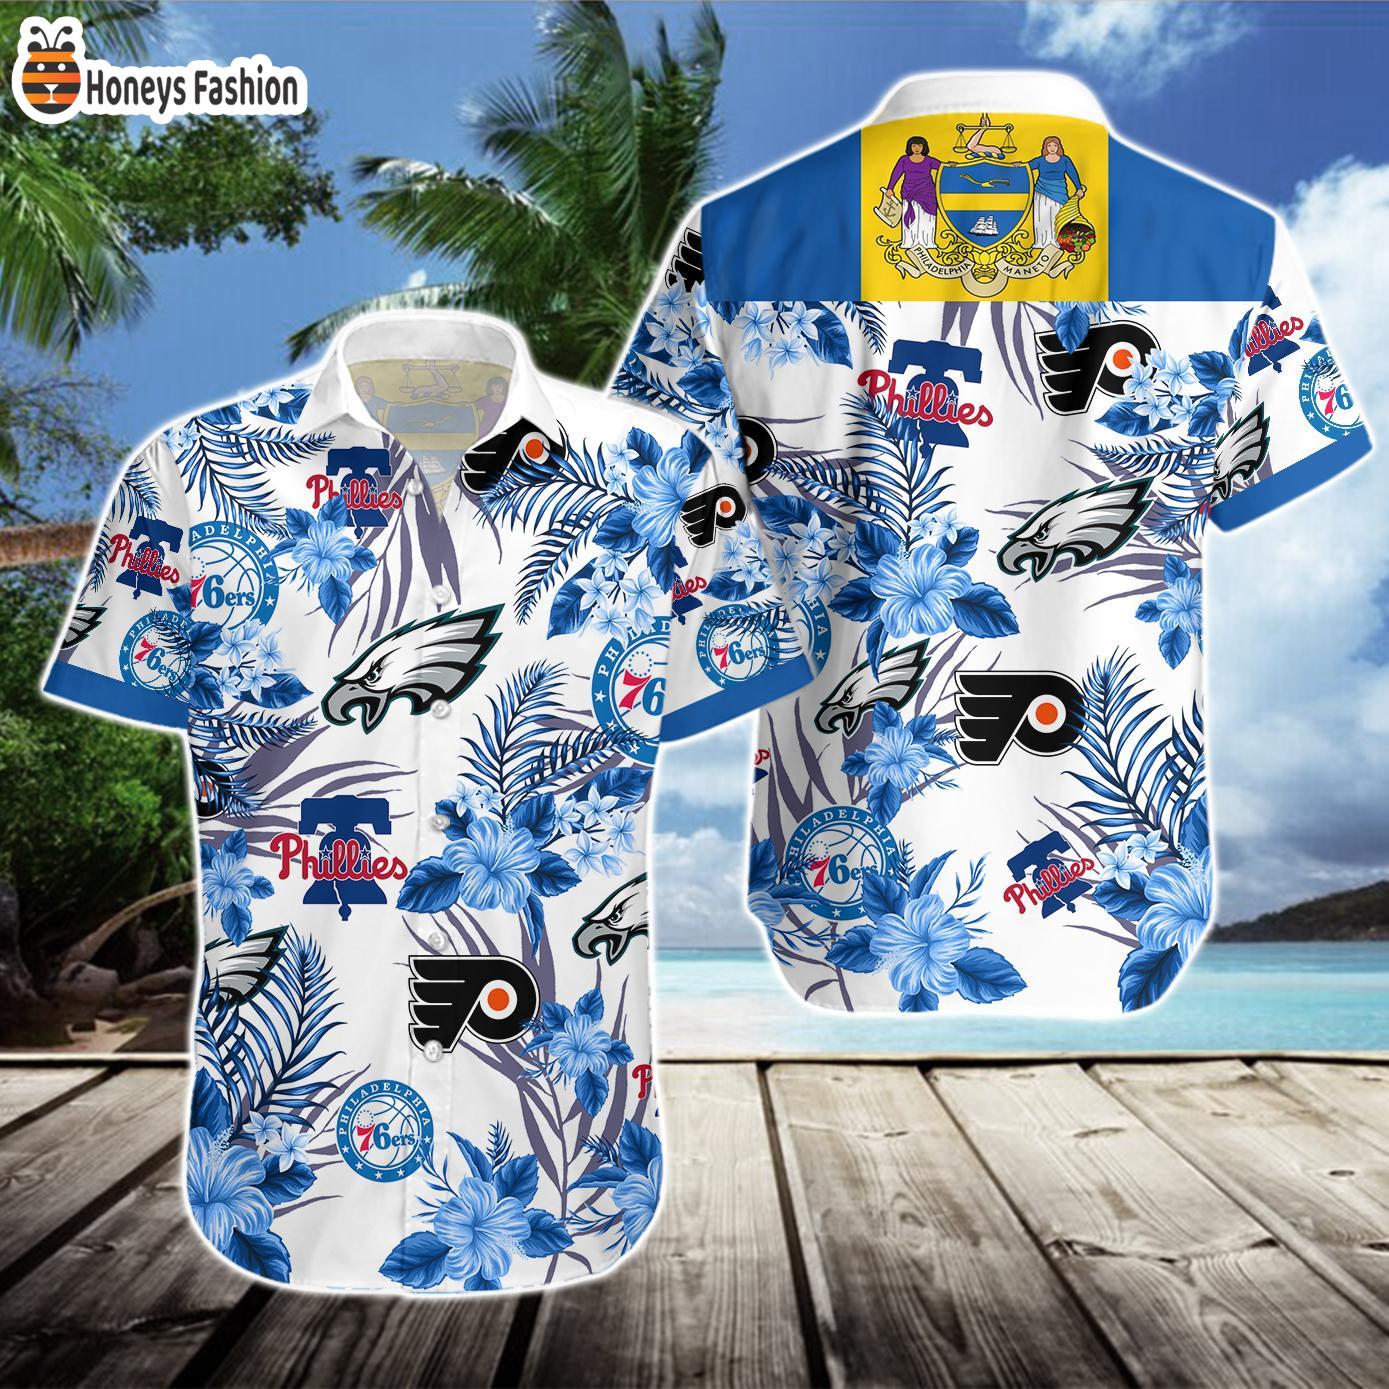 Philadelphia Eagles 76ers Phillies Flyers Hawaiian Shirt